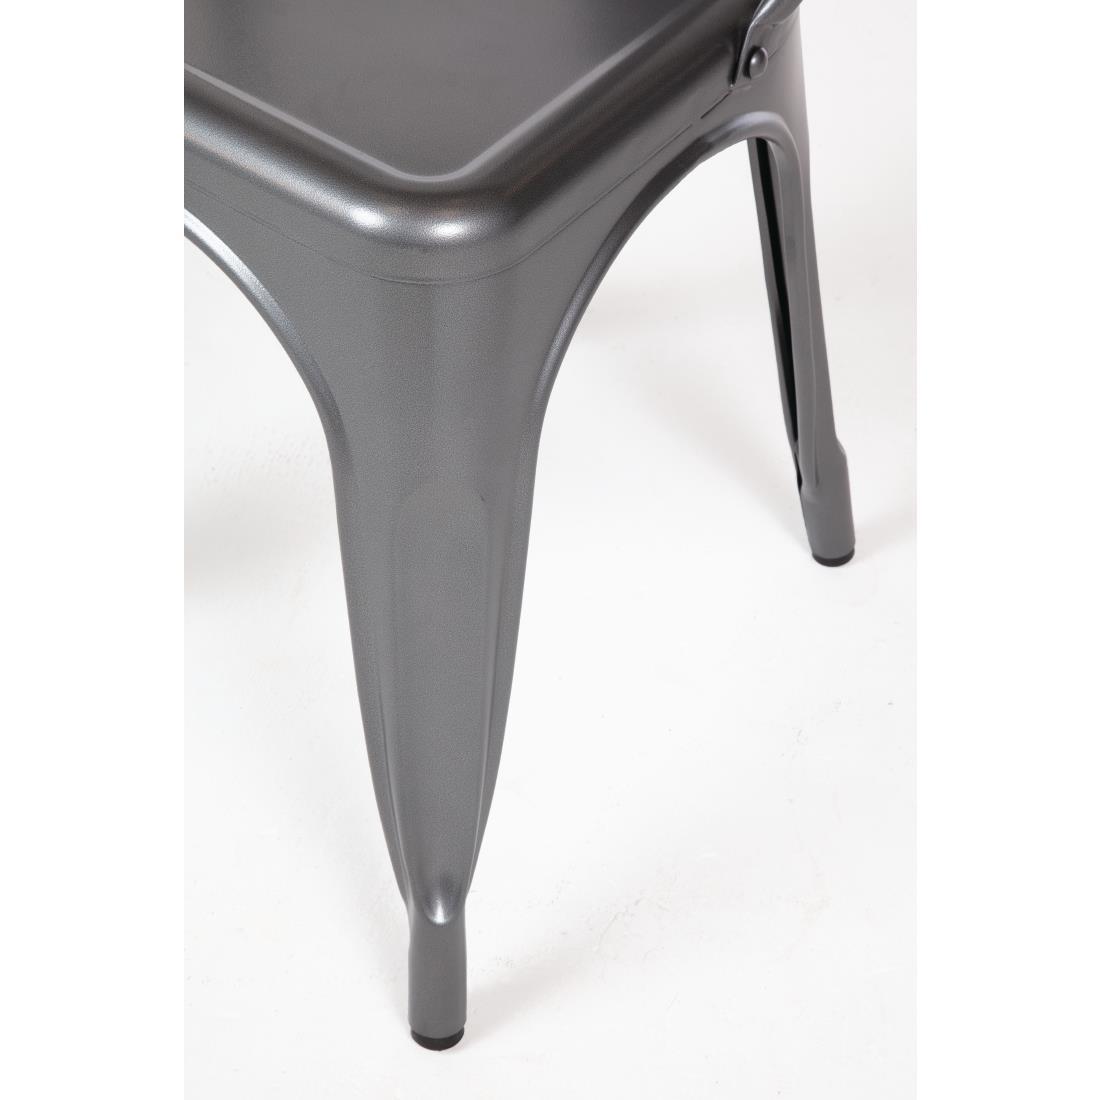 Bolero Bistro Steel Side Chairs Gun Metal Grey (Pack of 4) - GL329  - 5